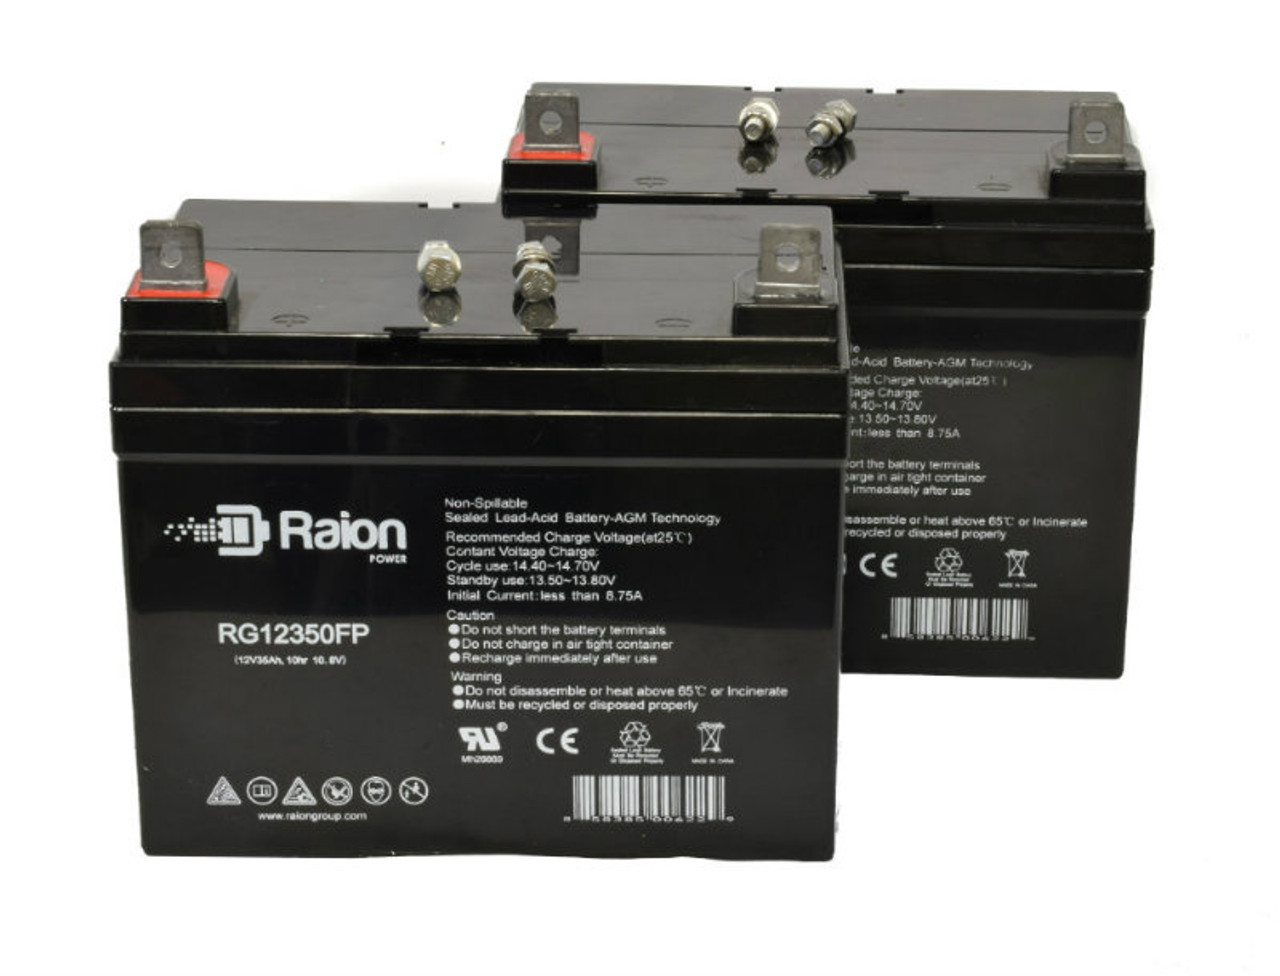 Raion Power Replacement 12V 35Ah Lawn Mower Battery for Hustler 251K - 2 Pack